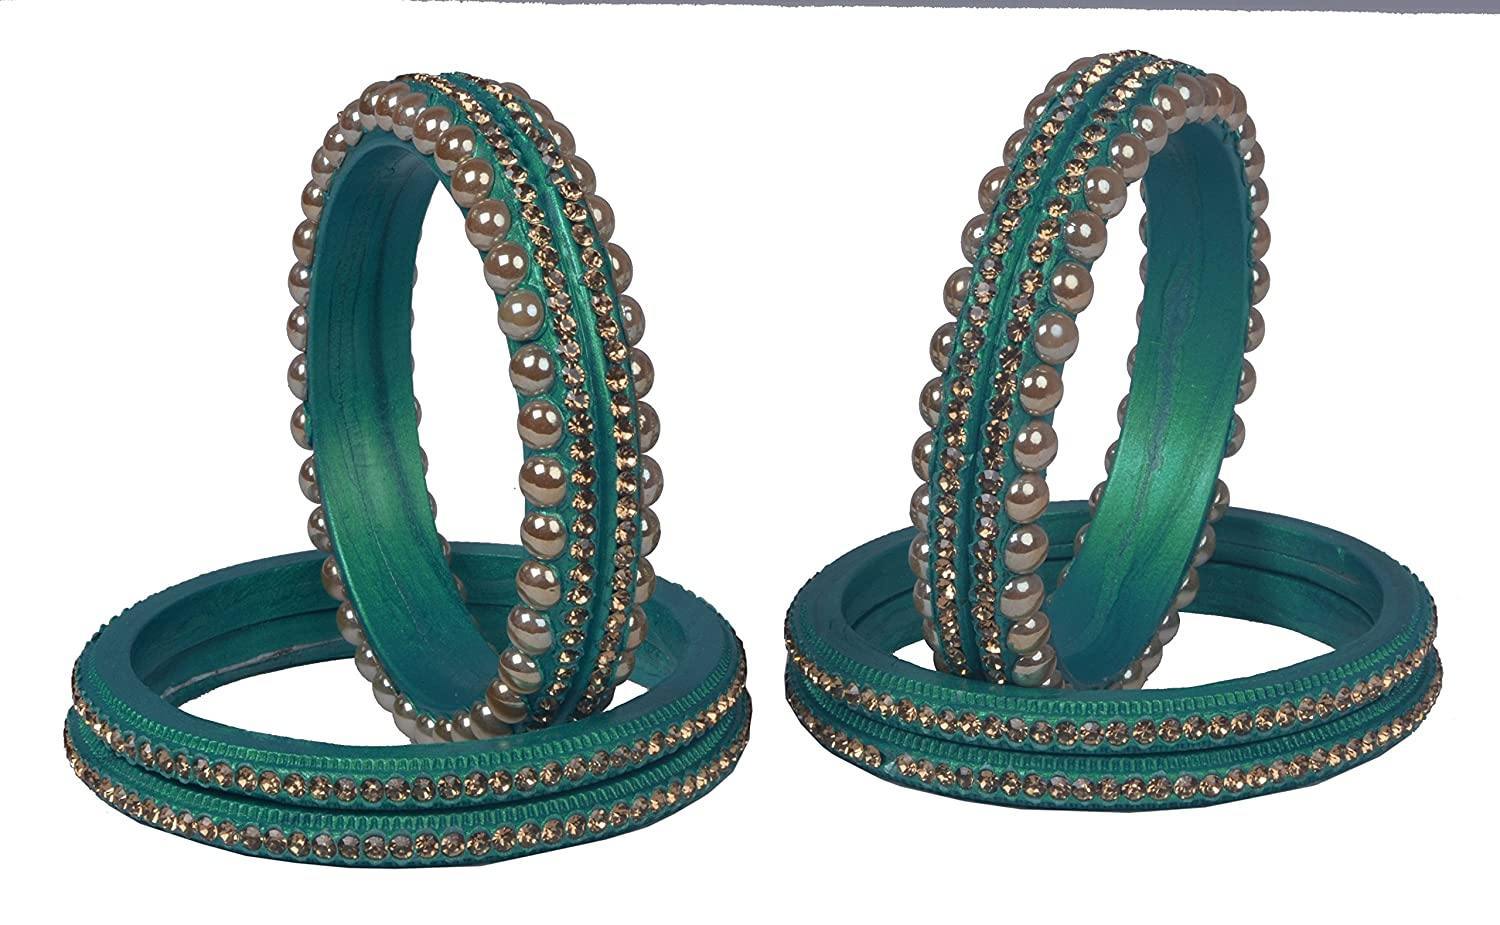 sukriti rajasthani wedding sea-green lac bangles for women - set of 6